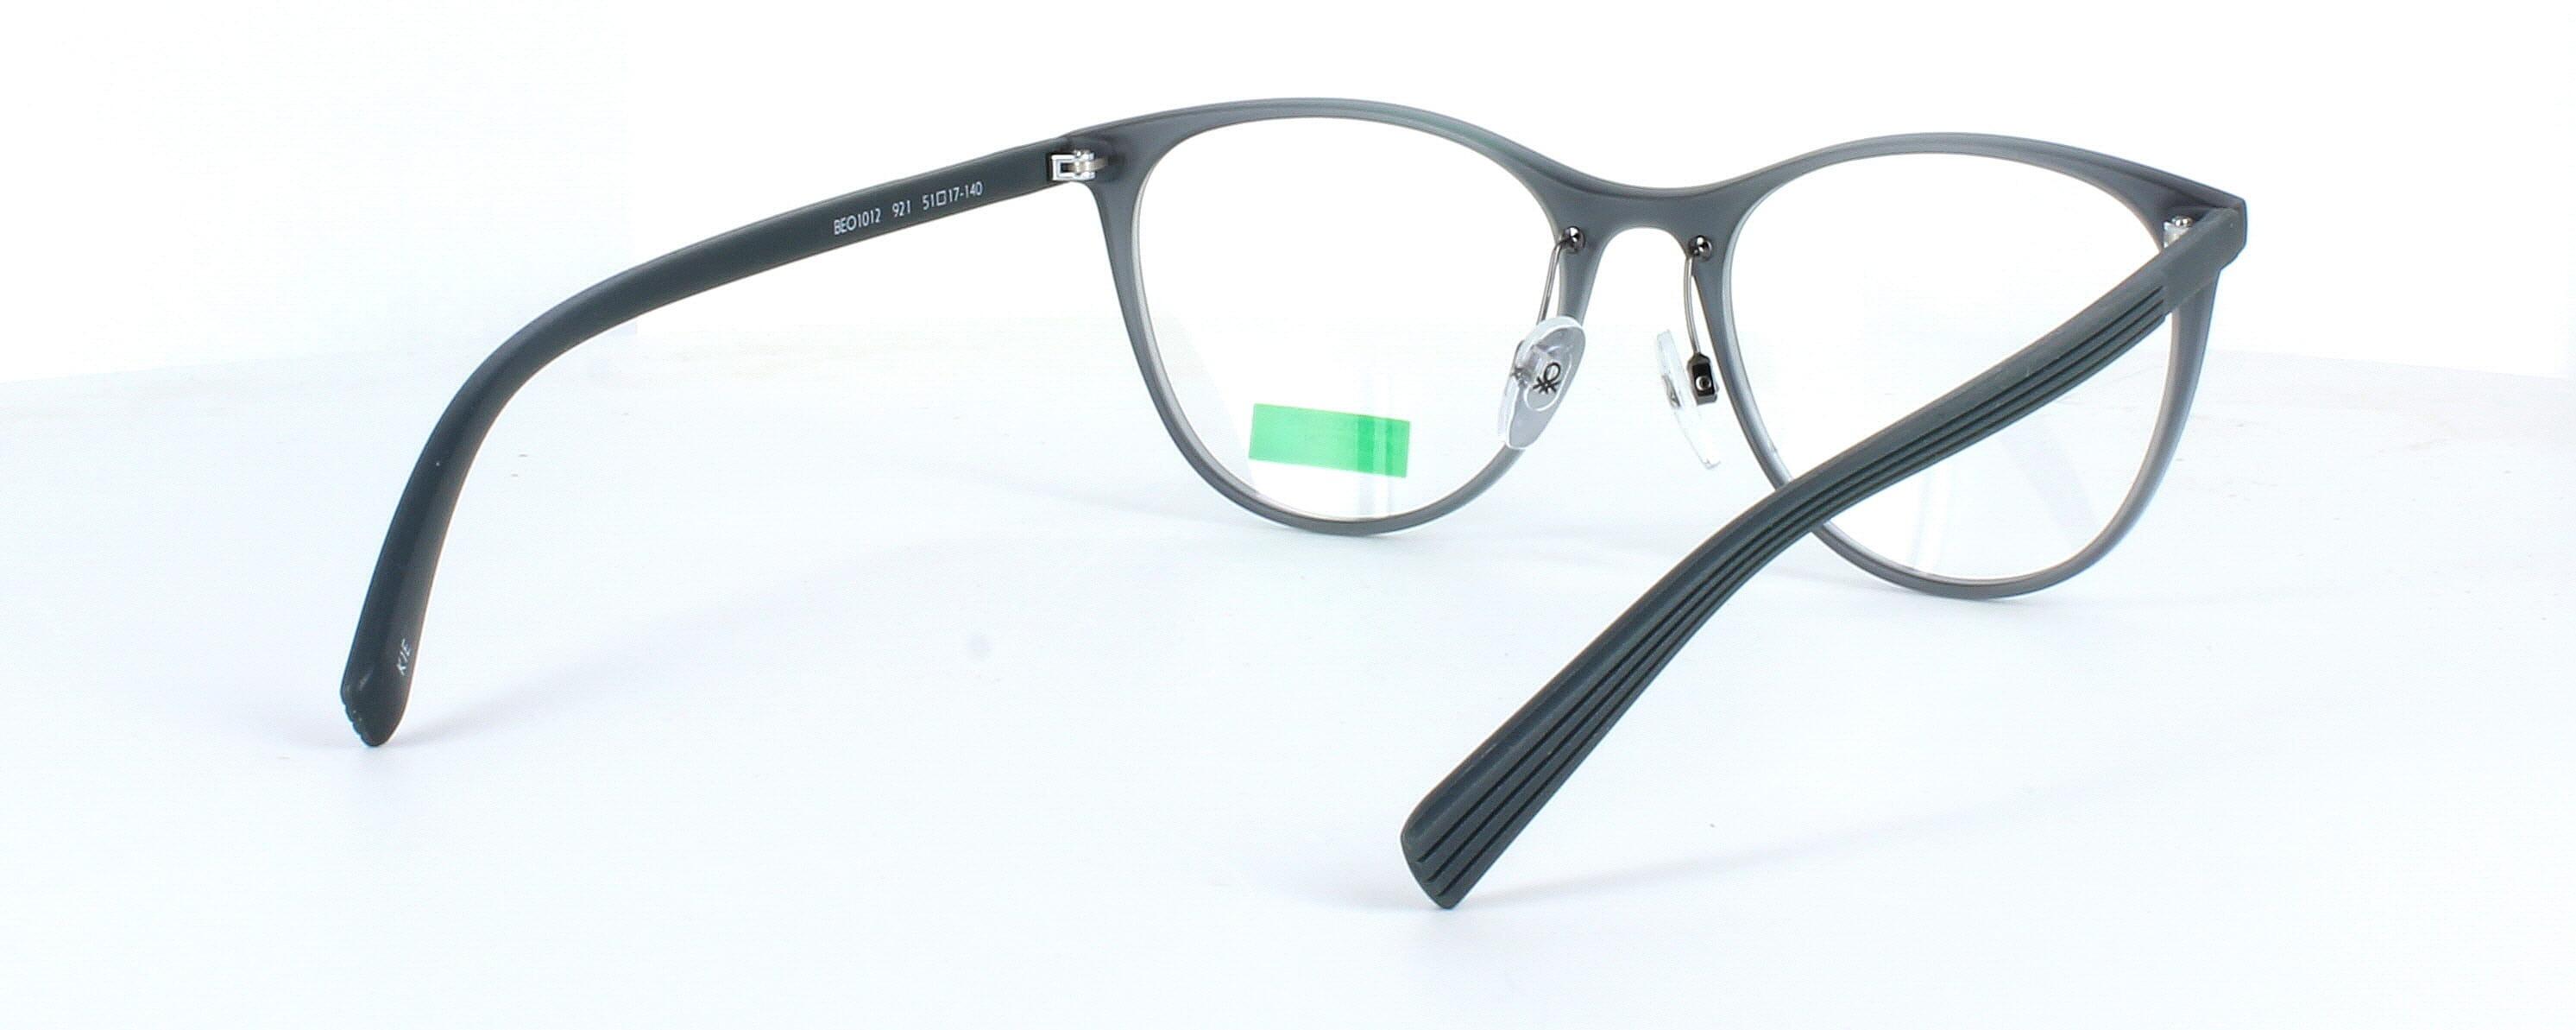 Benetton BEO1012 921 - Ladies dark grey round shaped TR90 lightweight glasses - image view 5